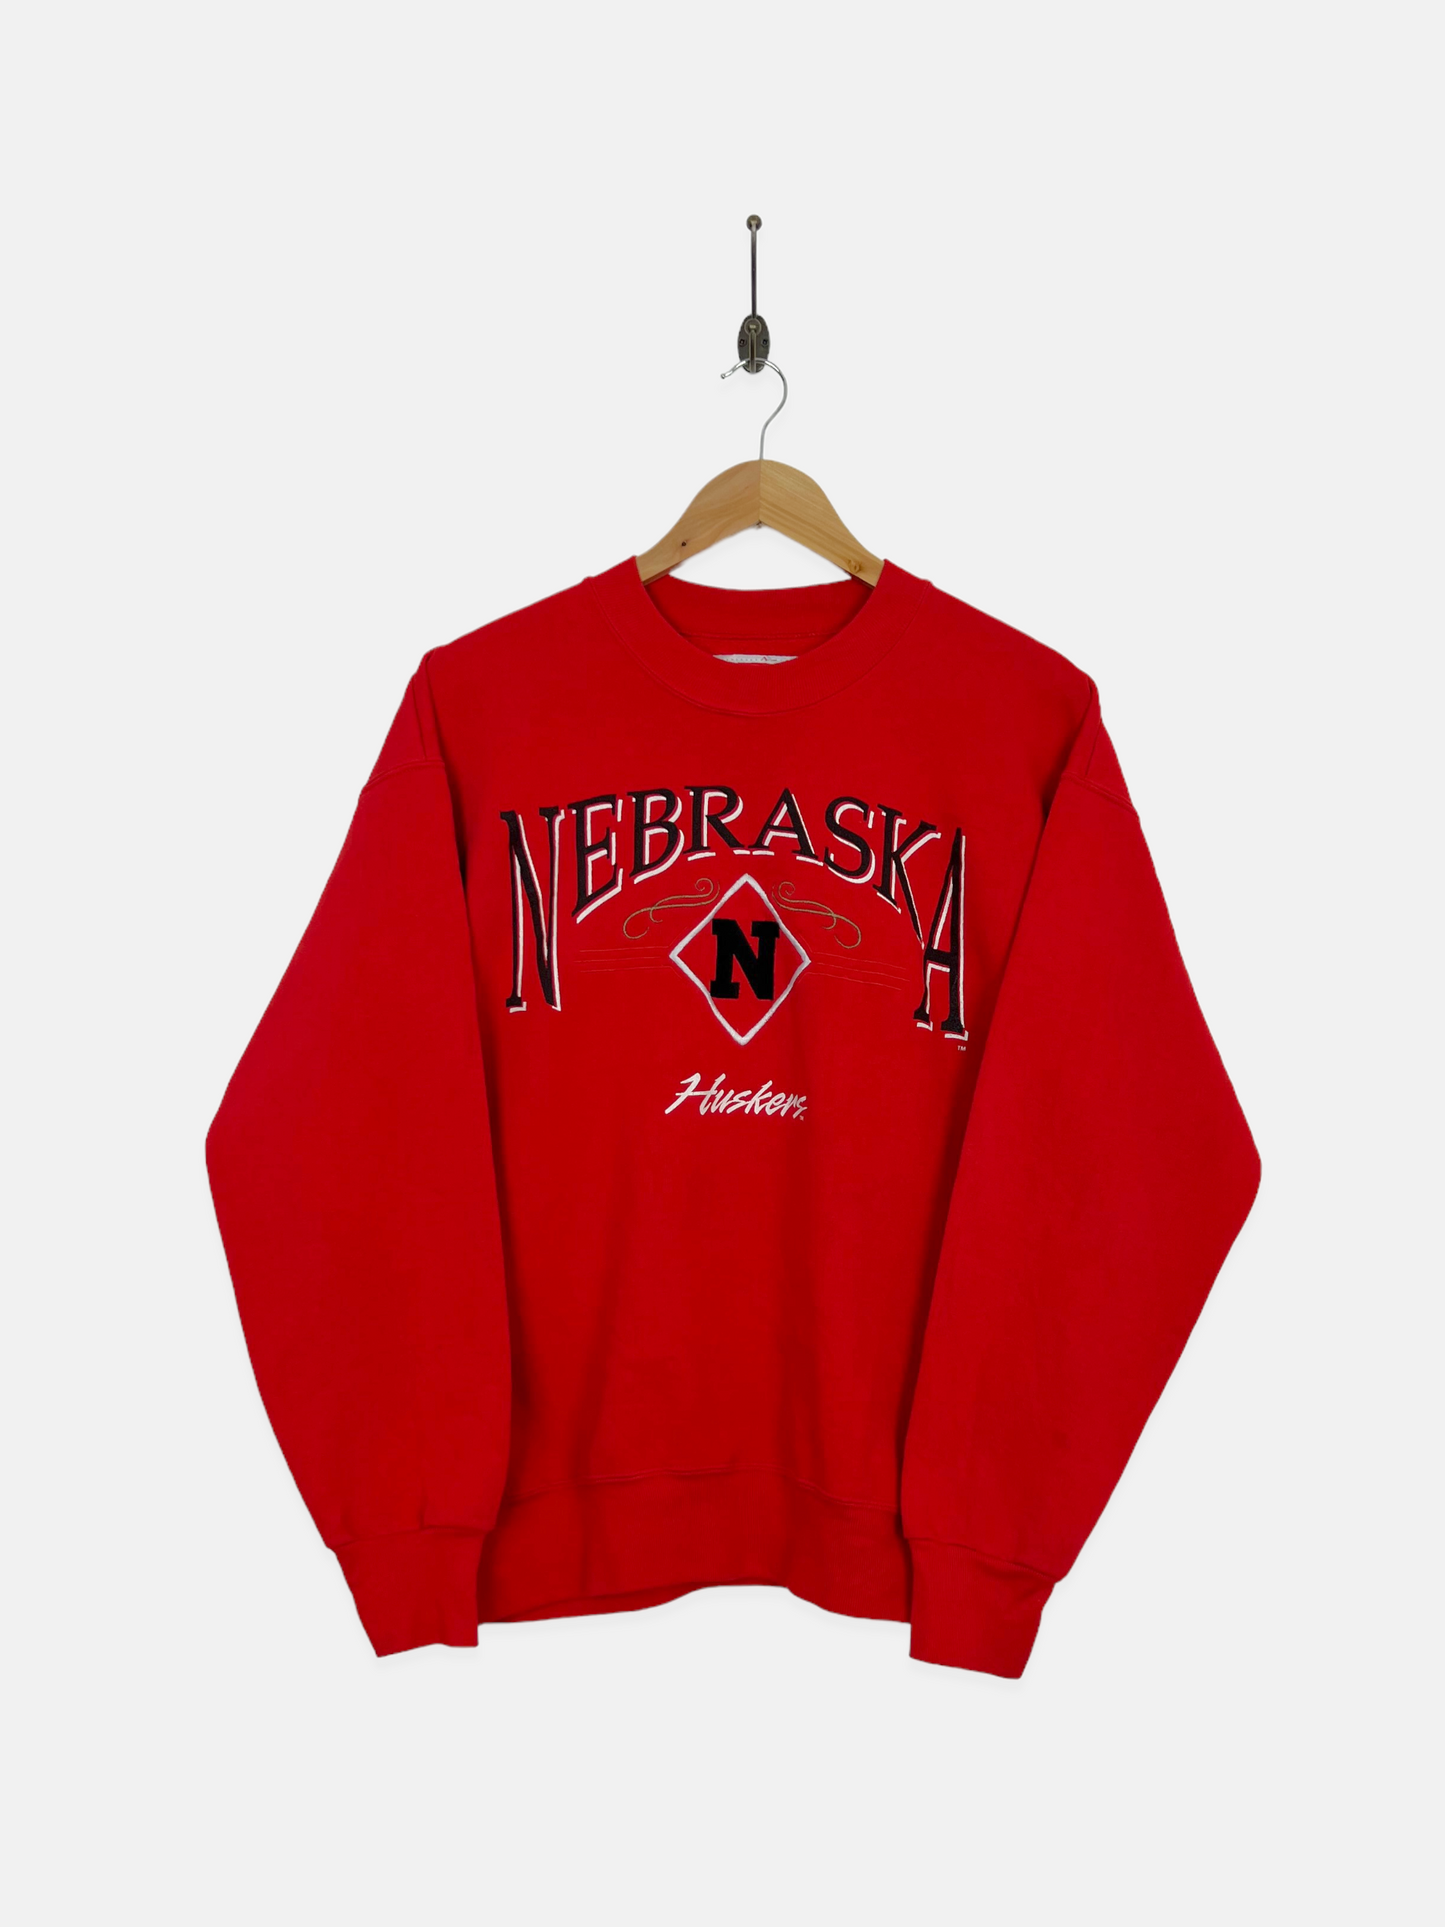 90's Nebraska Huskers USA Made Vintage Sweatshirt Size 12